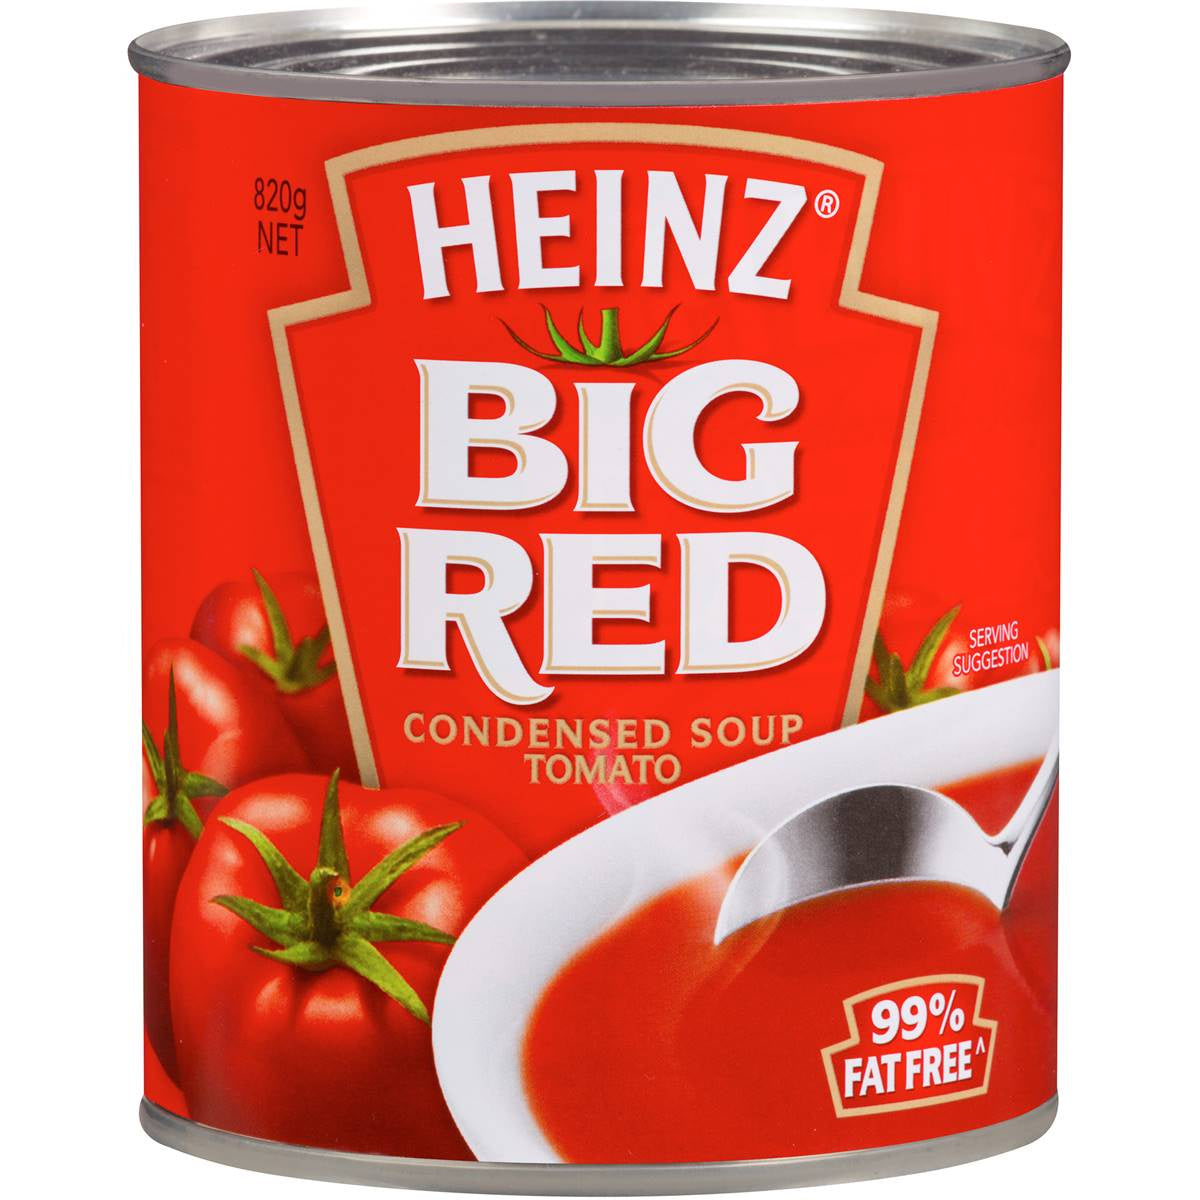 Heinz Big Red Tomato Soup 820g